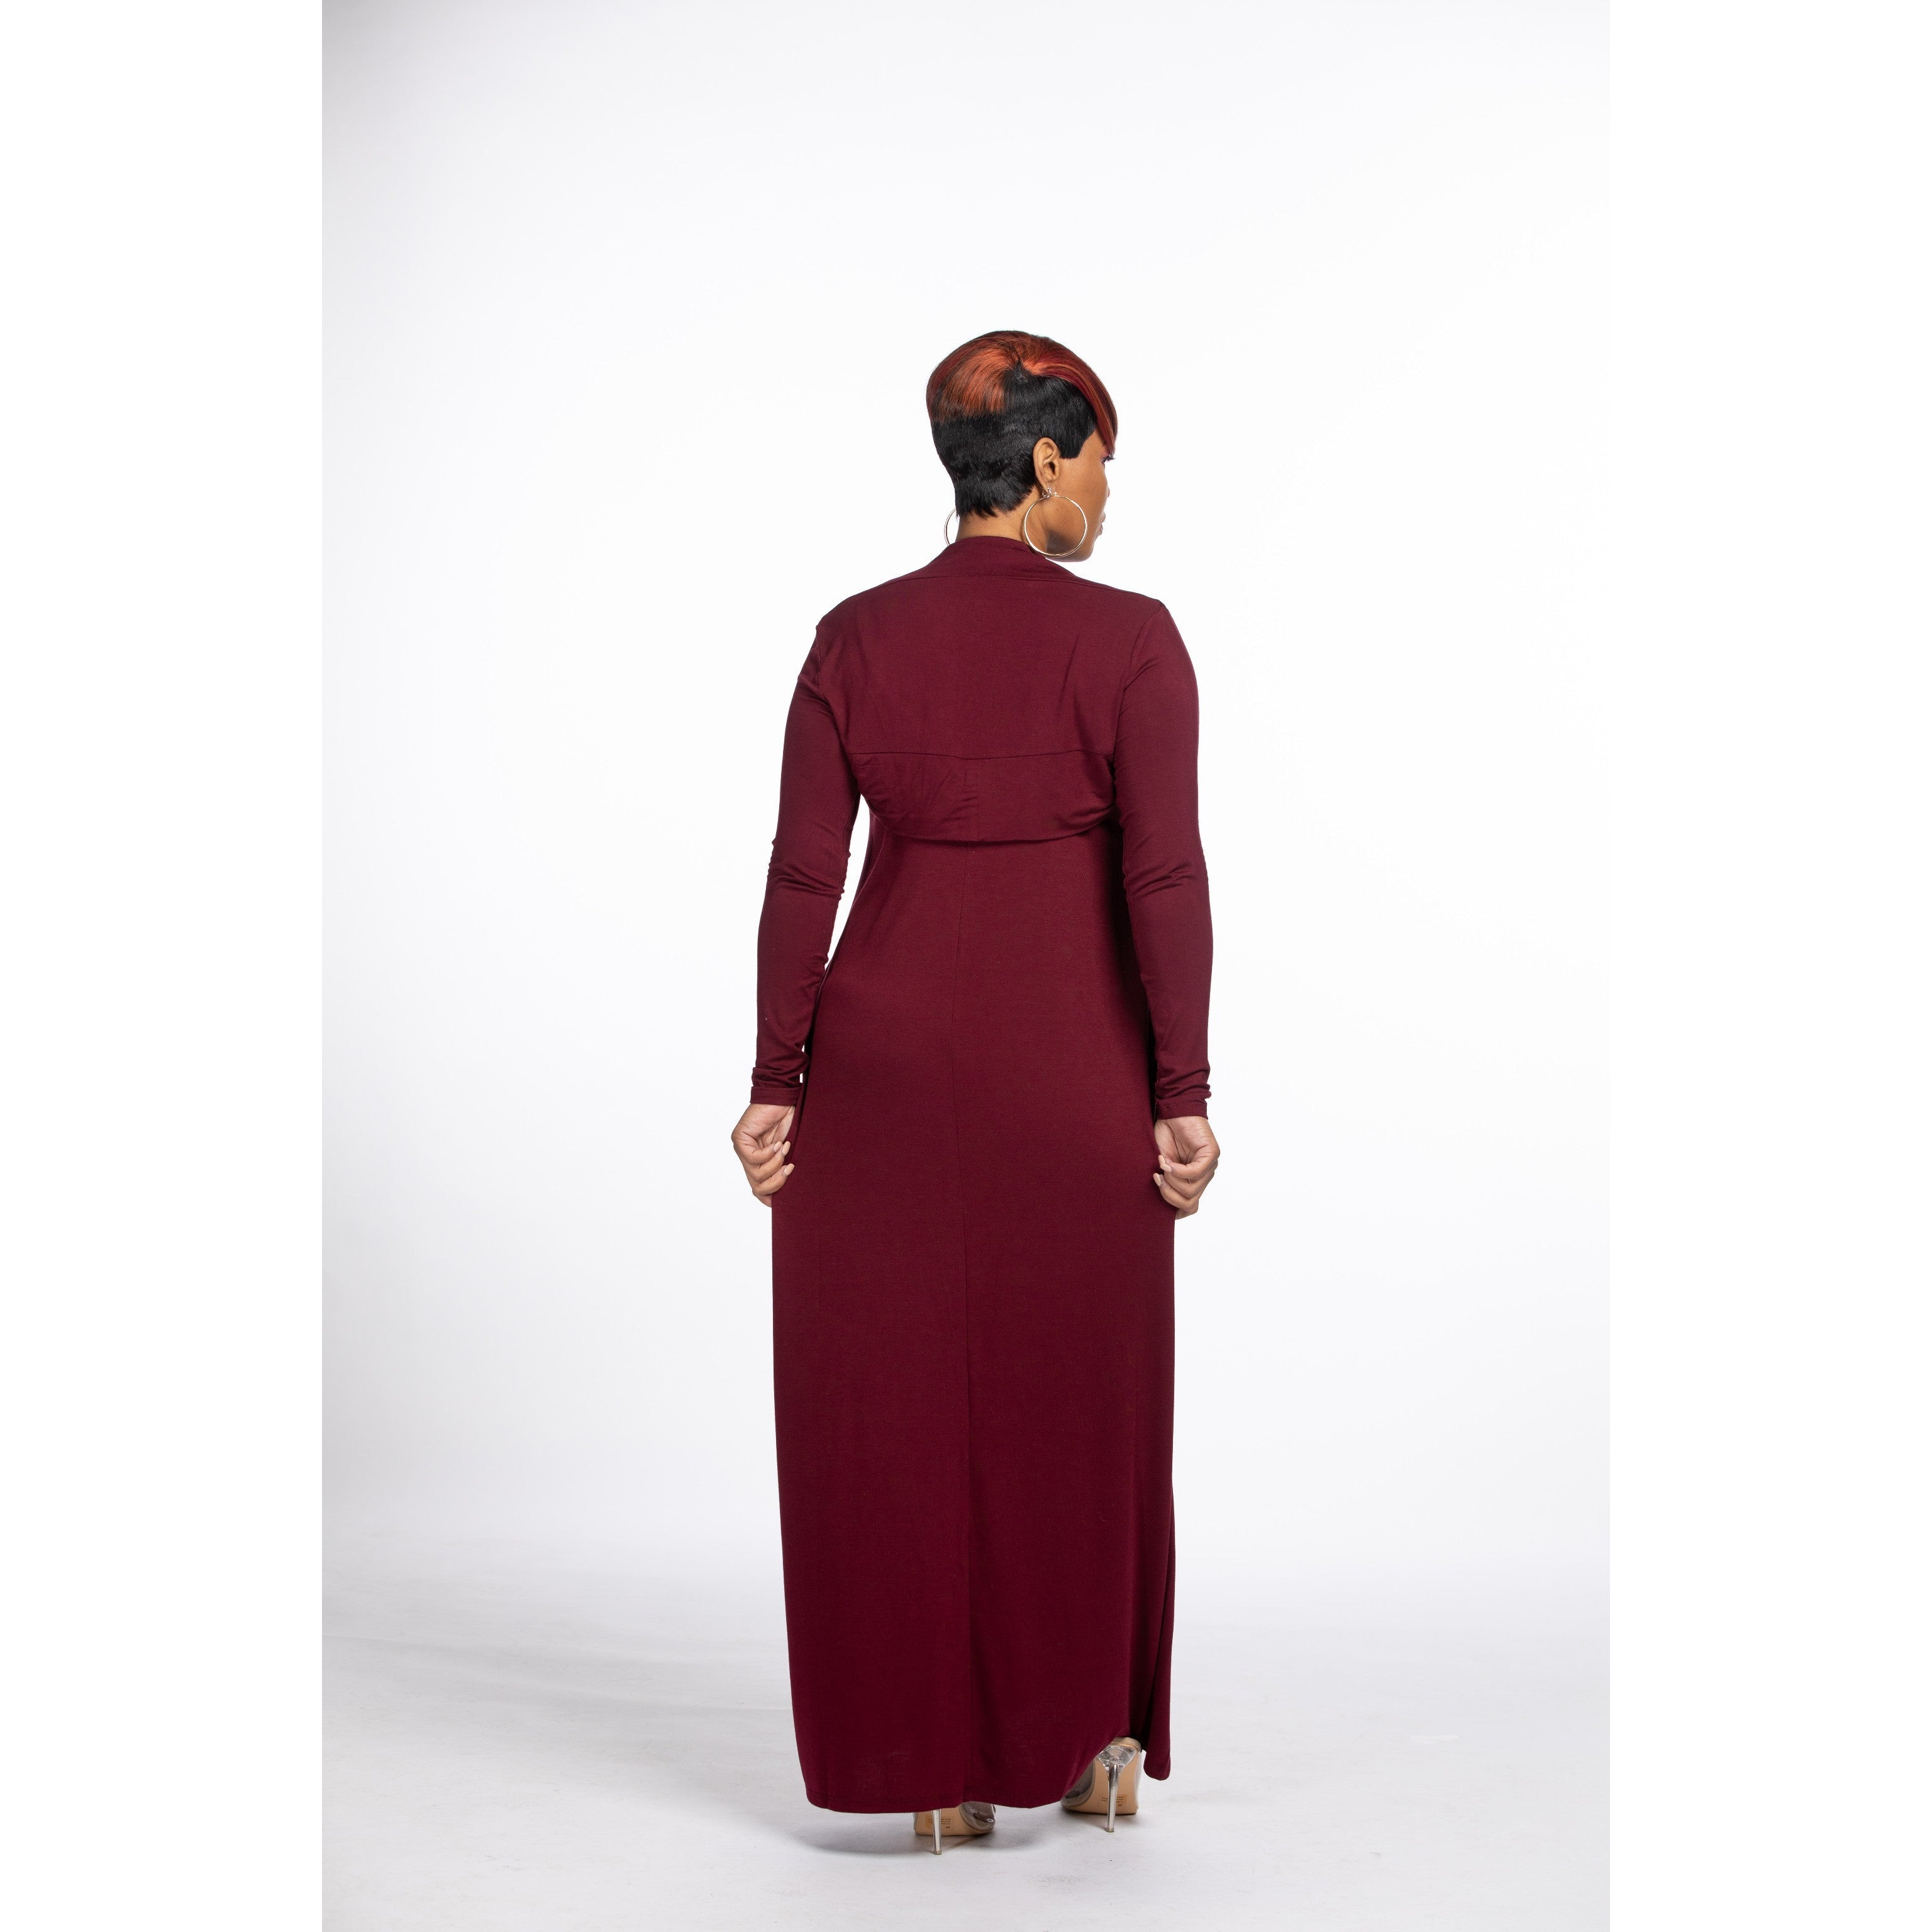 Jamilah Maxi Dress - Ariya's Apparel and Accessories